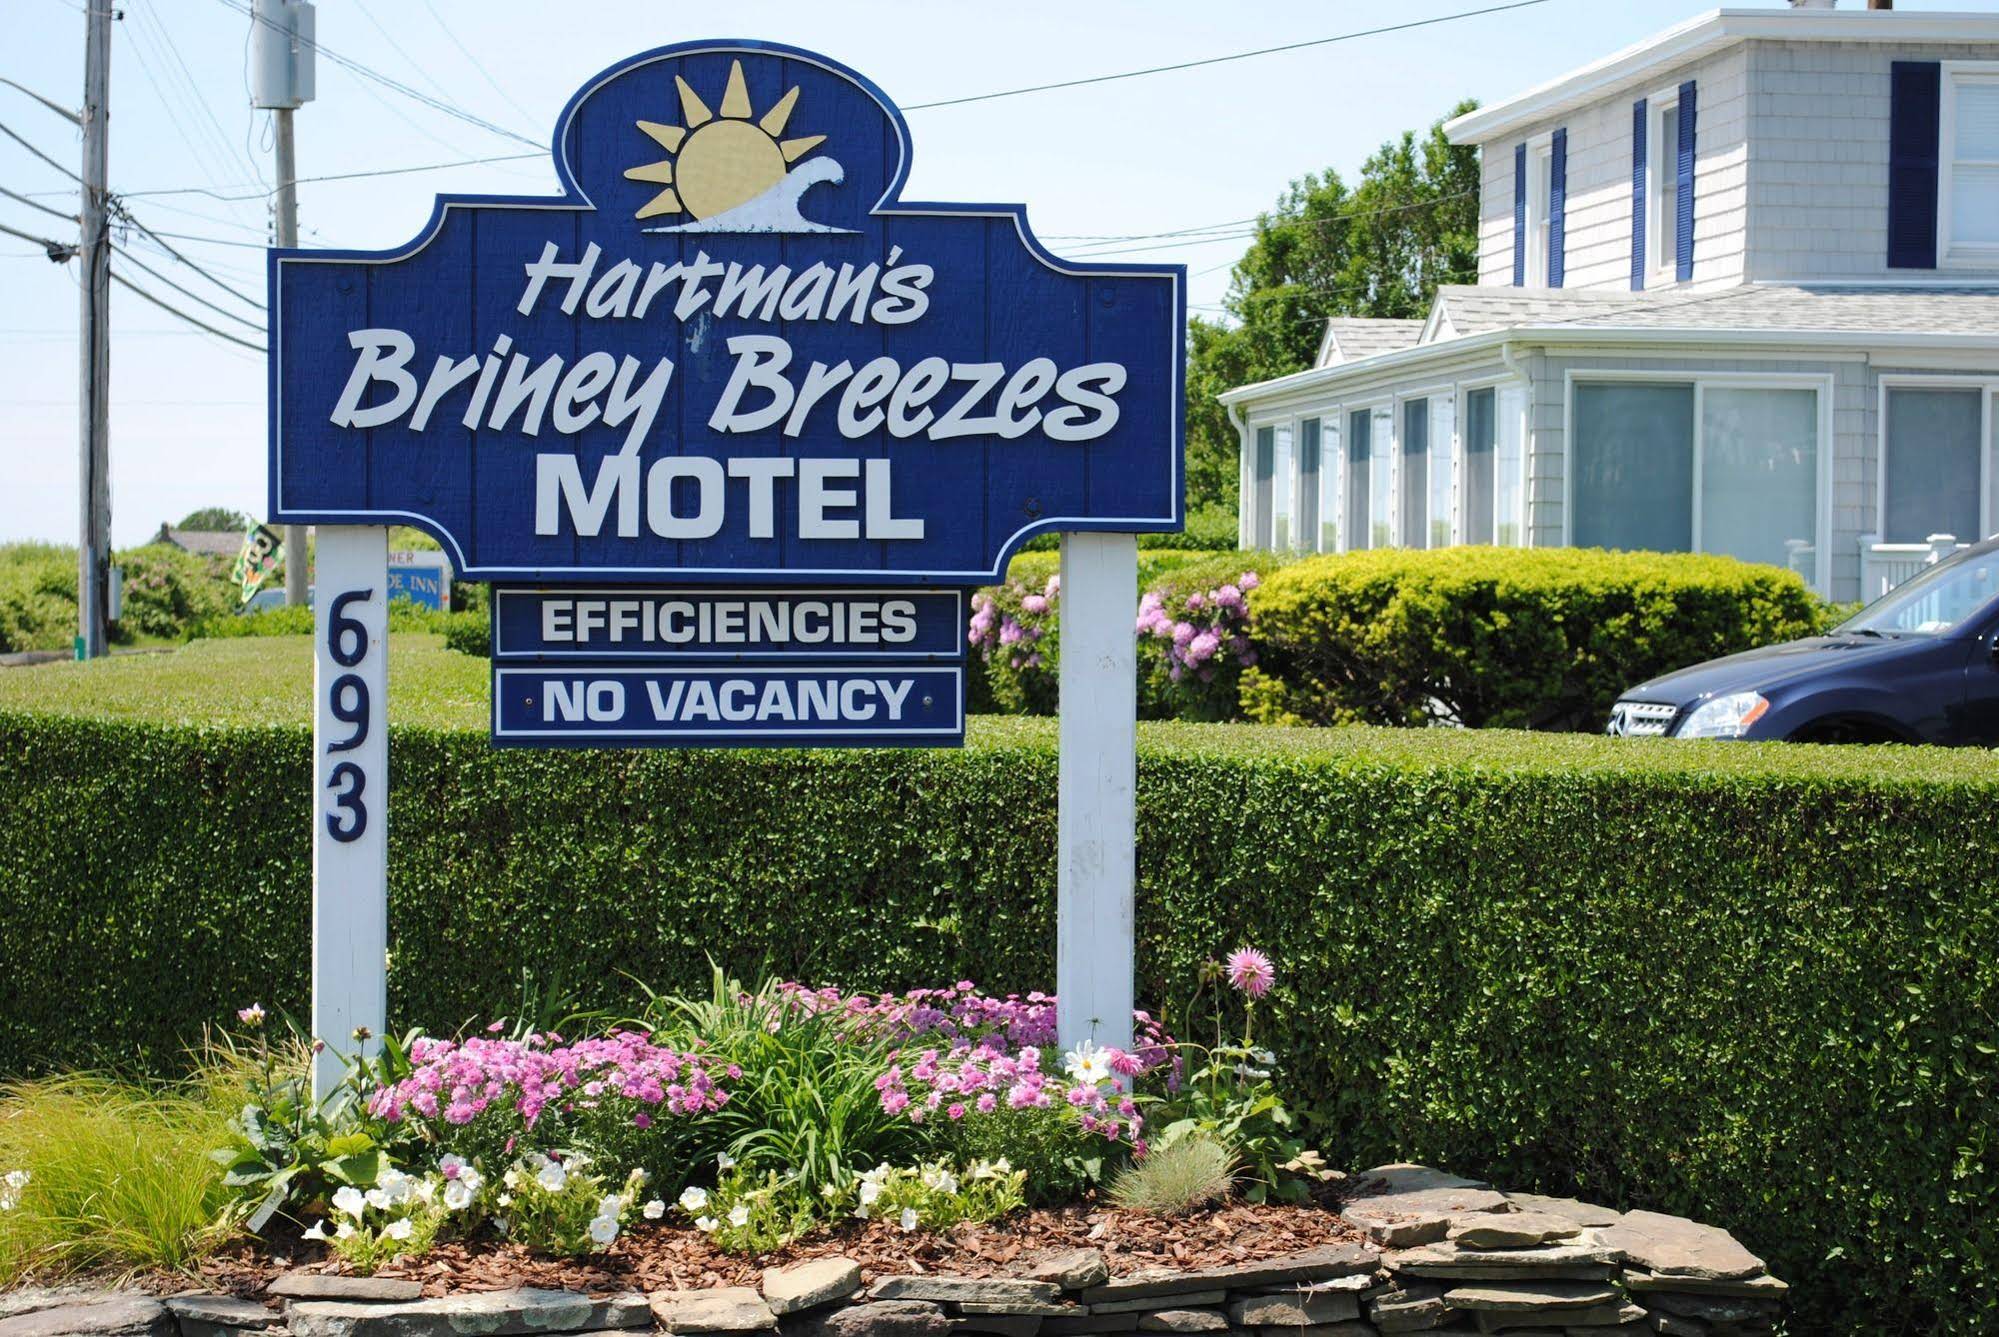 Hartman'S Briney Breezes Motel